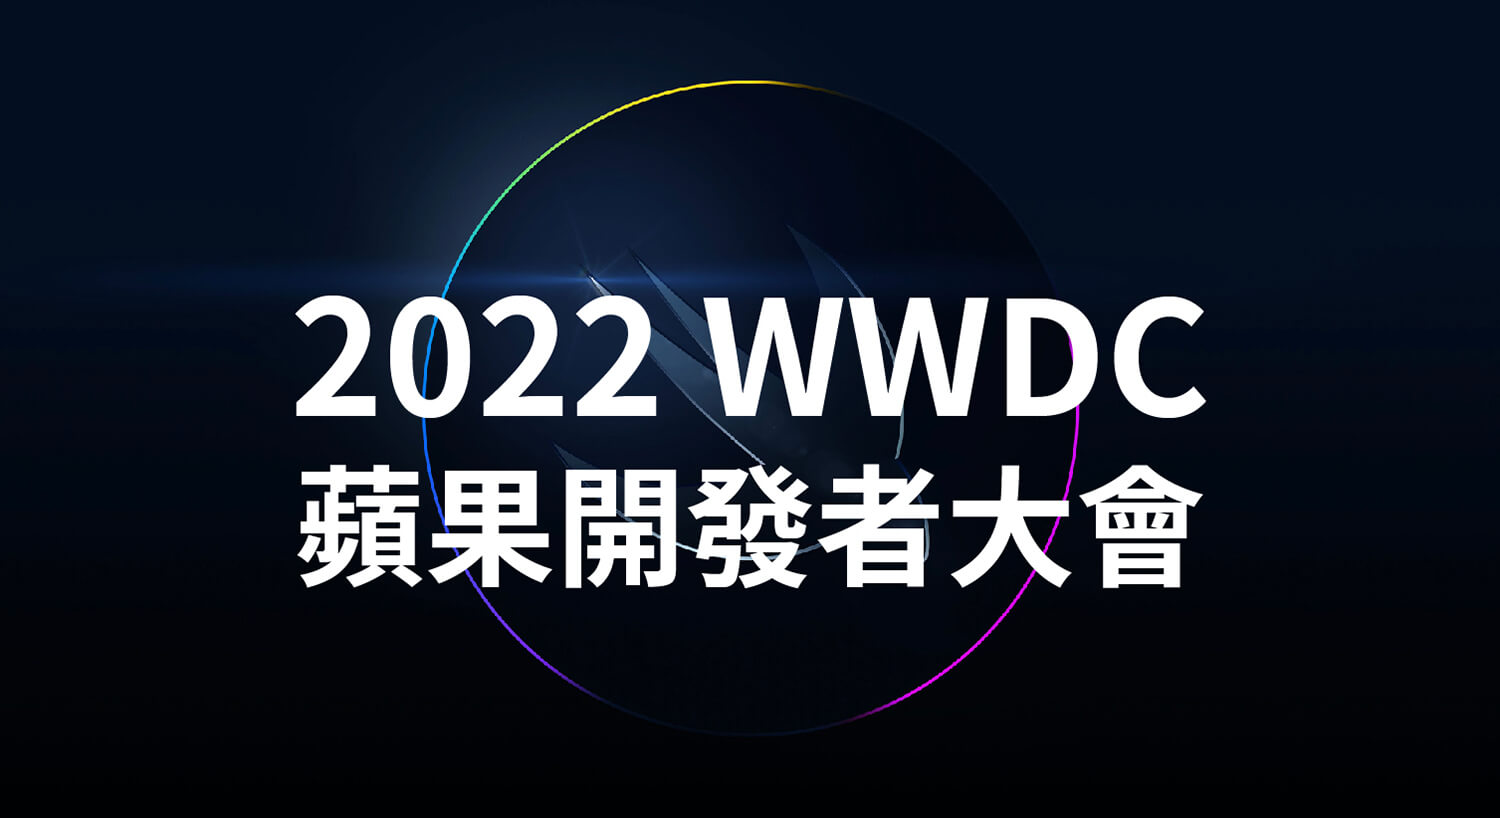 2022 WWDC 蘋果開發者大會將於 6/6 舉行並發布 iOS 16 等系統更新 - 2022 WWDC, iOS 16, iOS16, iPadOS 16, iPadOS16, macOS 13, watchOS 9, WWDC - 塔科女子